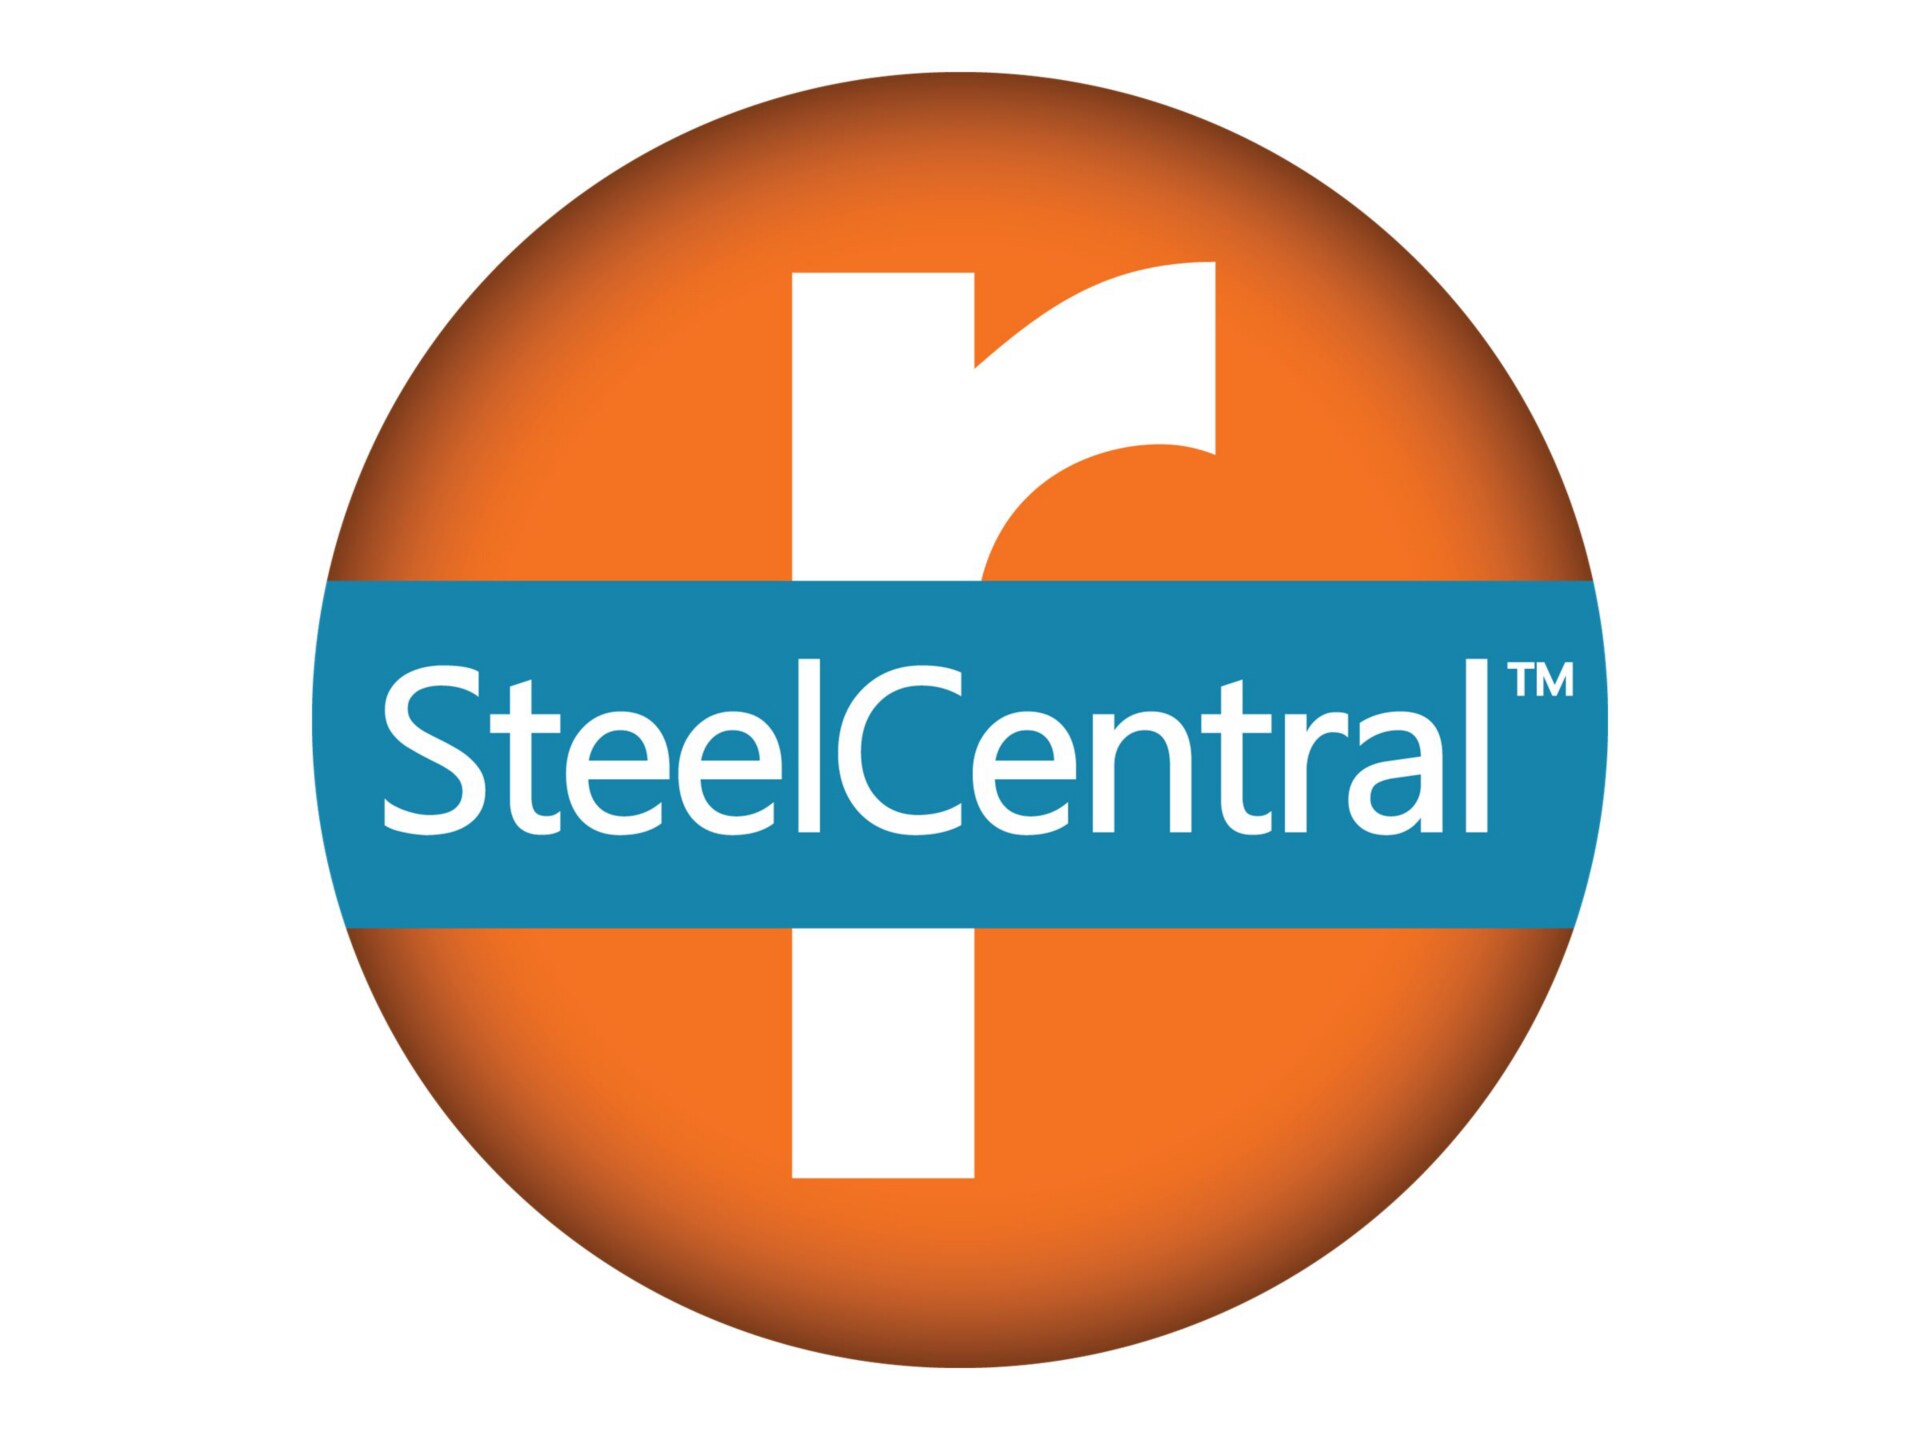 SteelCentral NetProfiler Virtual Edition, NetProfiler Cloud Expansion Modul